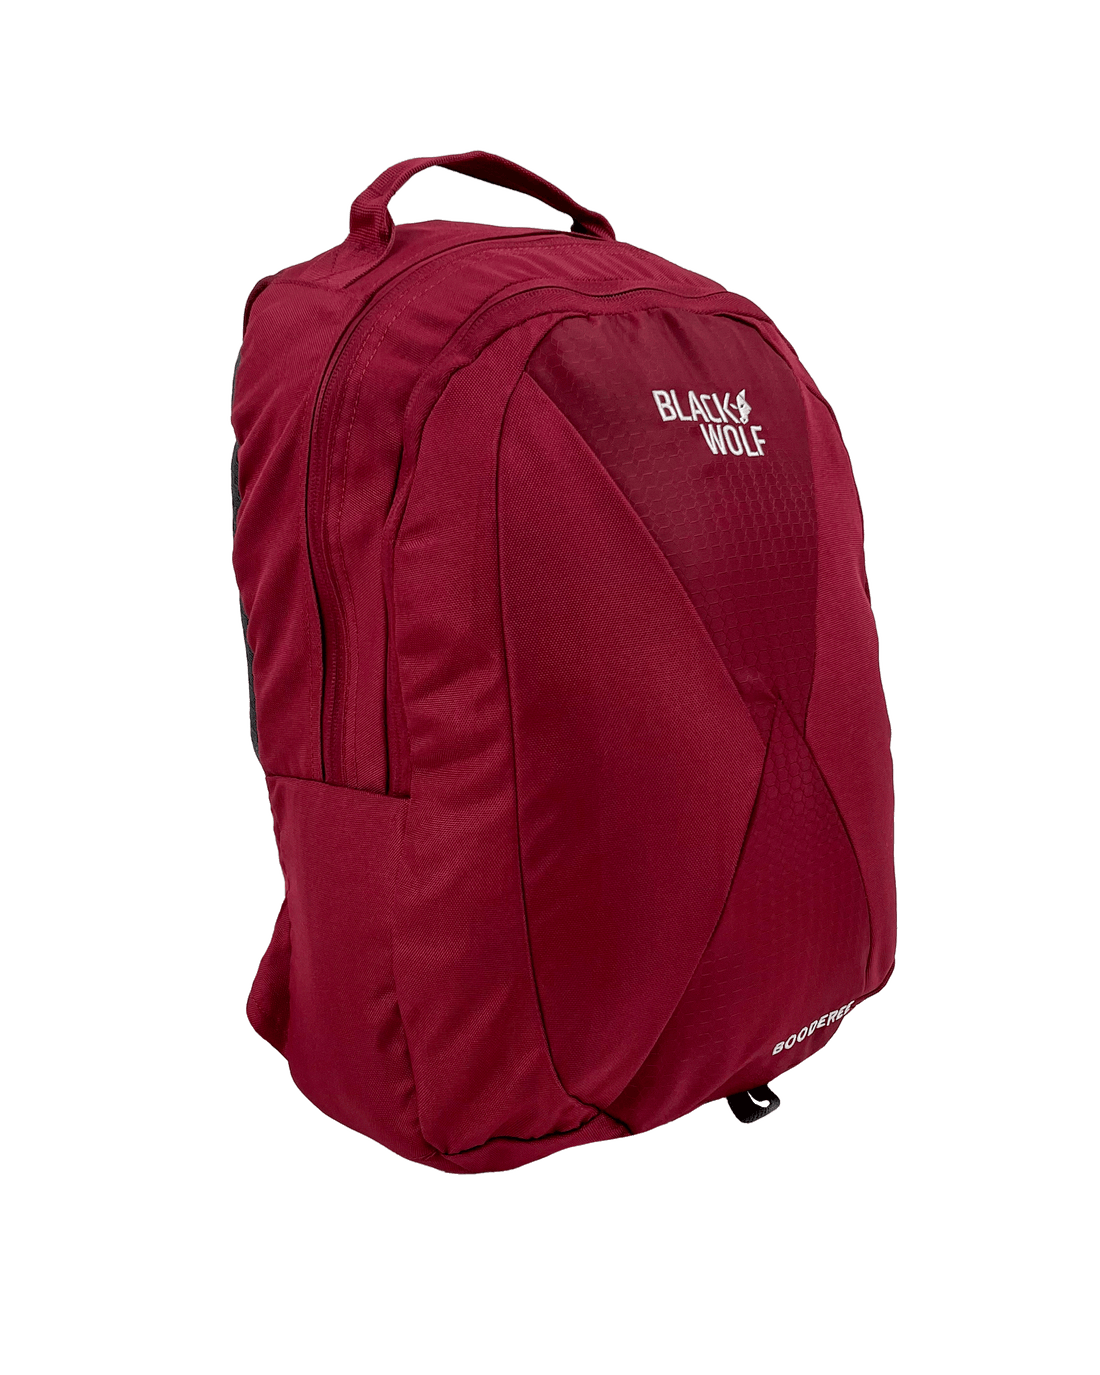 Black Wolf - Booderee 20L Backpack - Tibetan Red